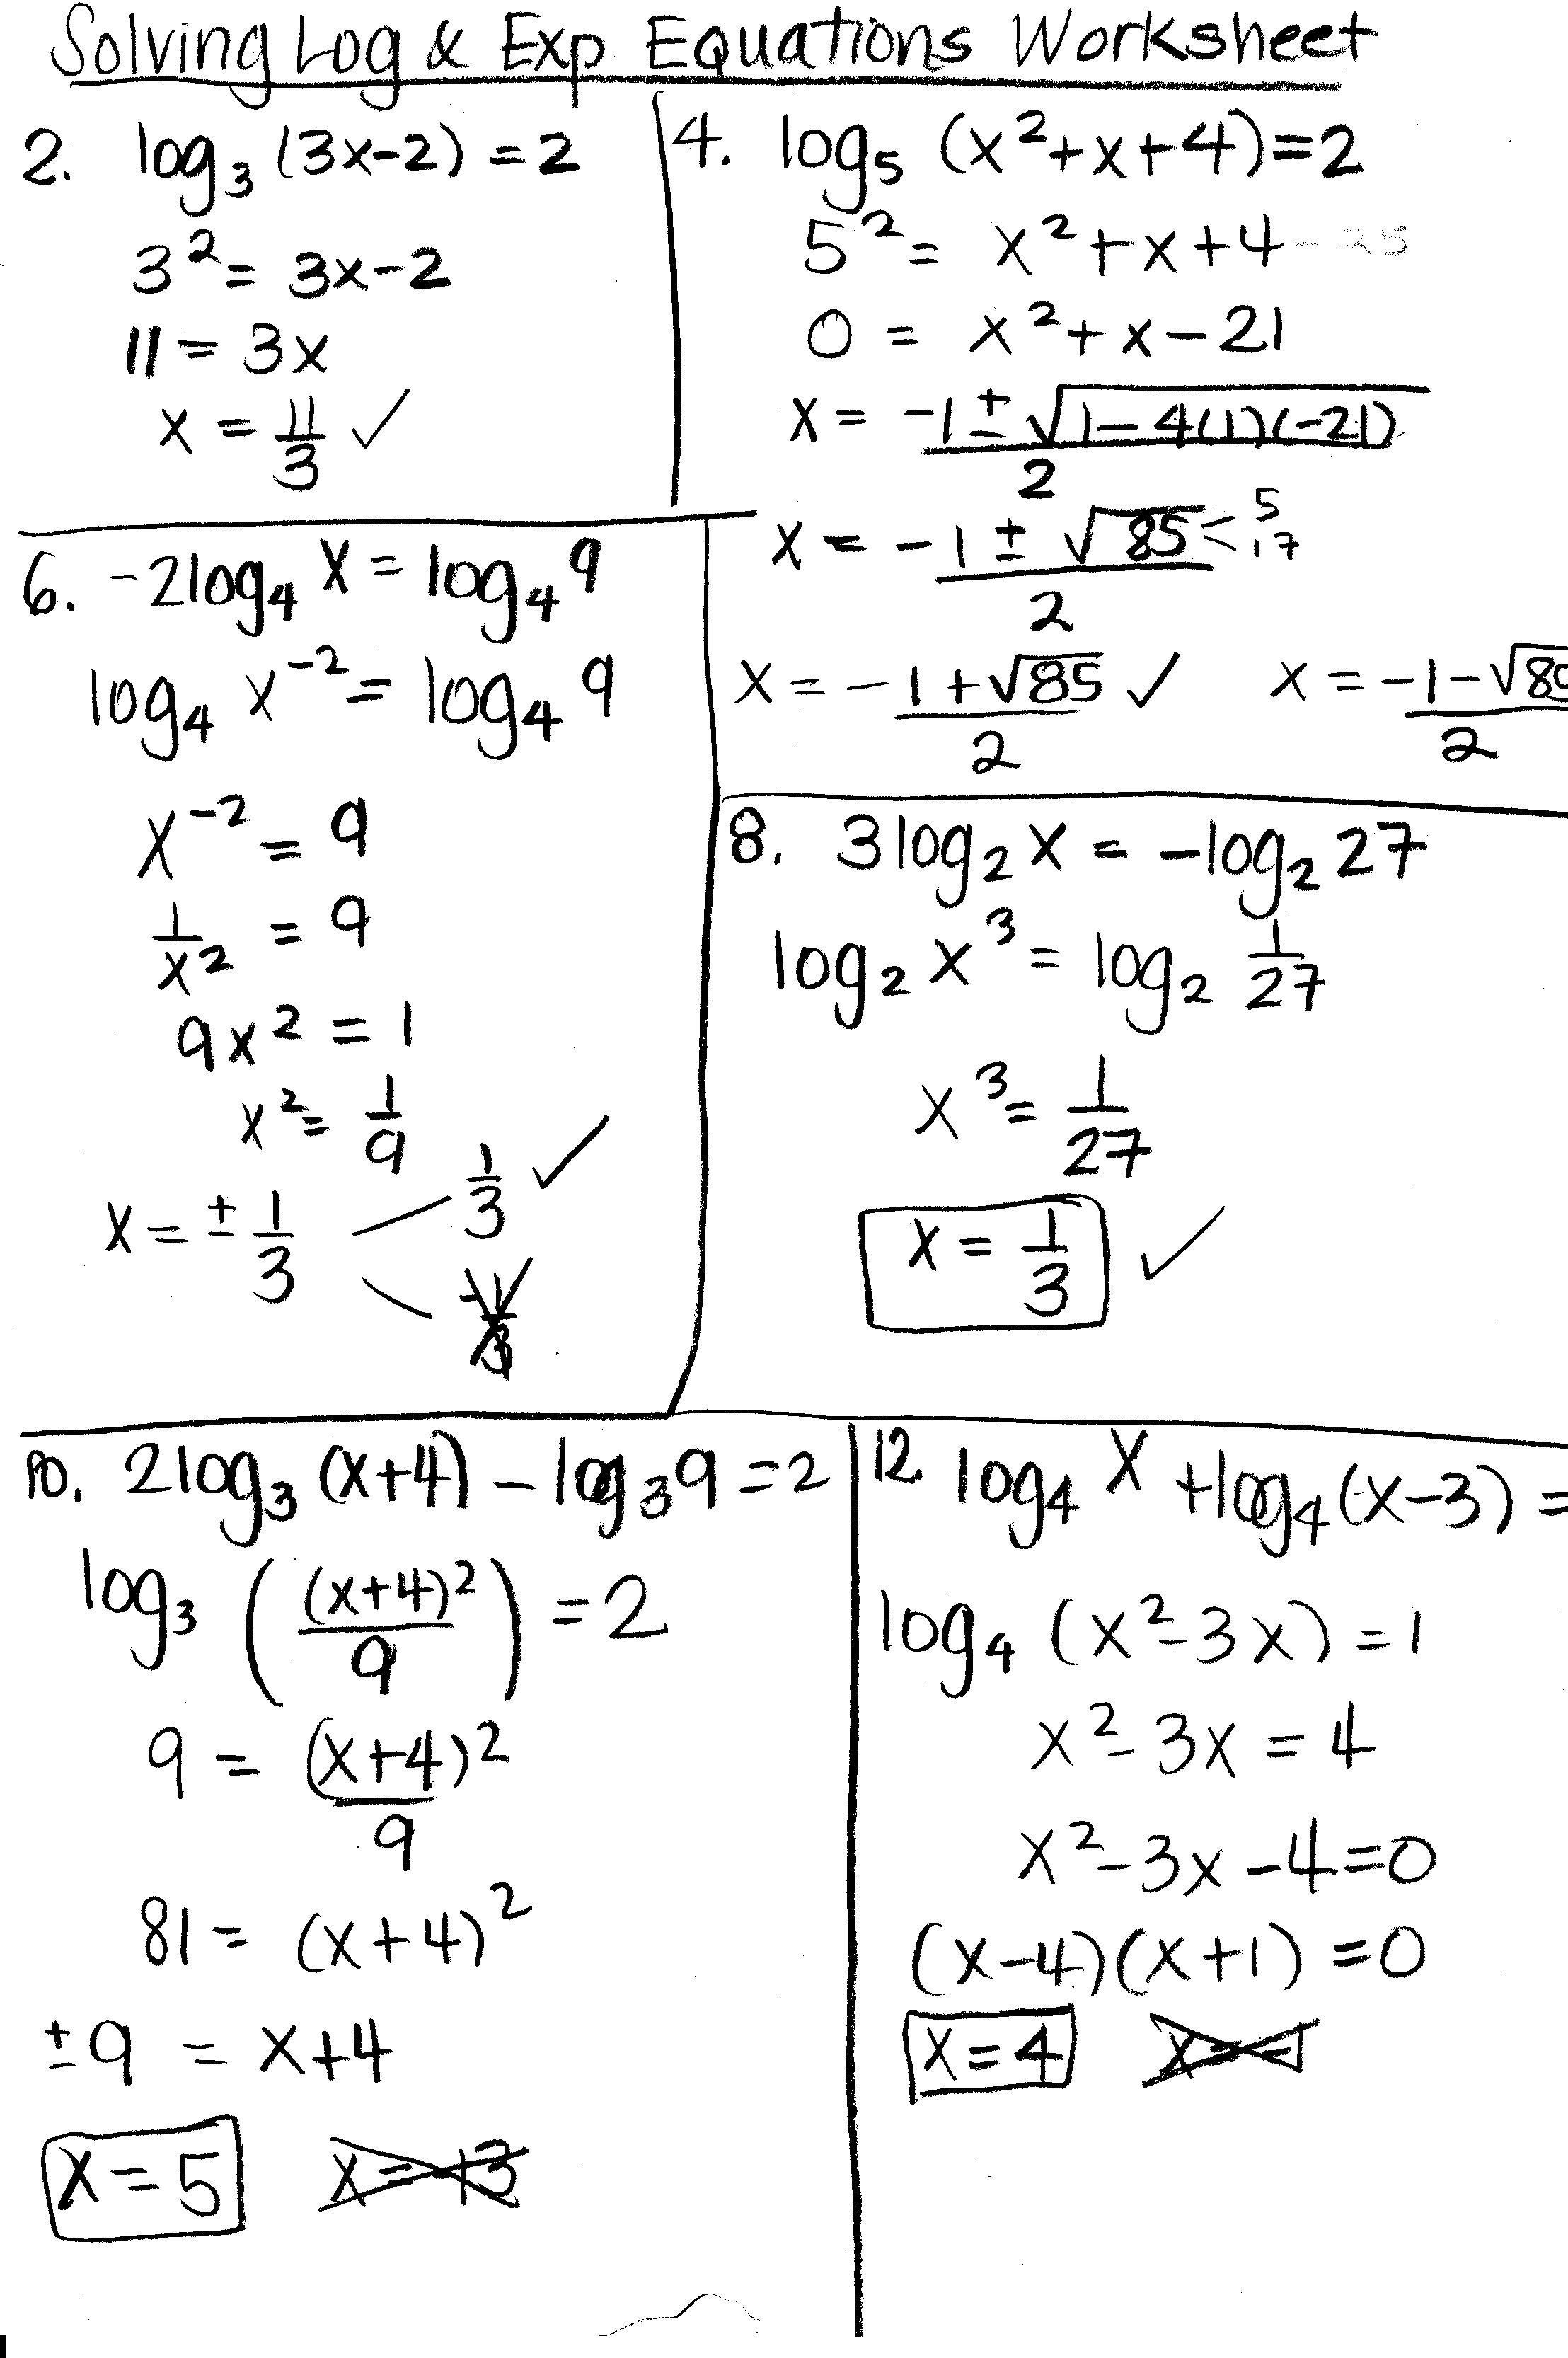 Solving Logarithmic Equations Worksheet  Yooob Inside Logarithmic Equations Worksheet With Answers